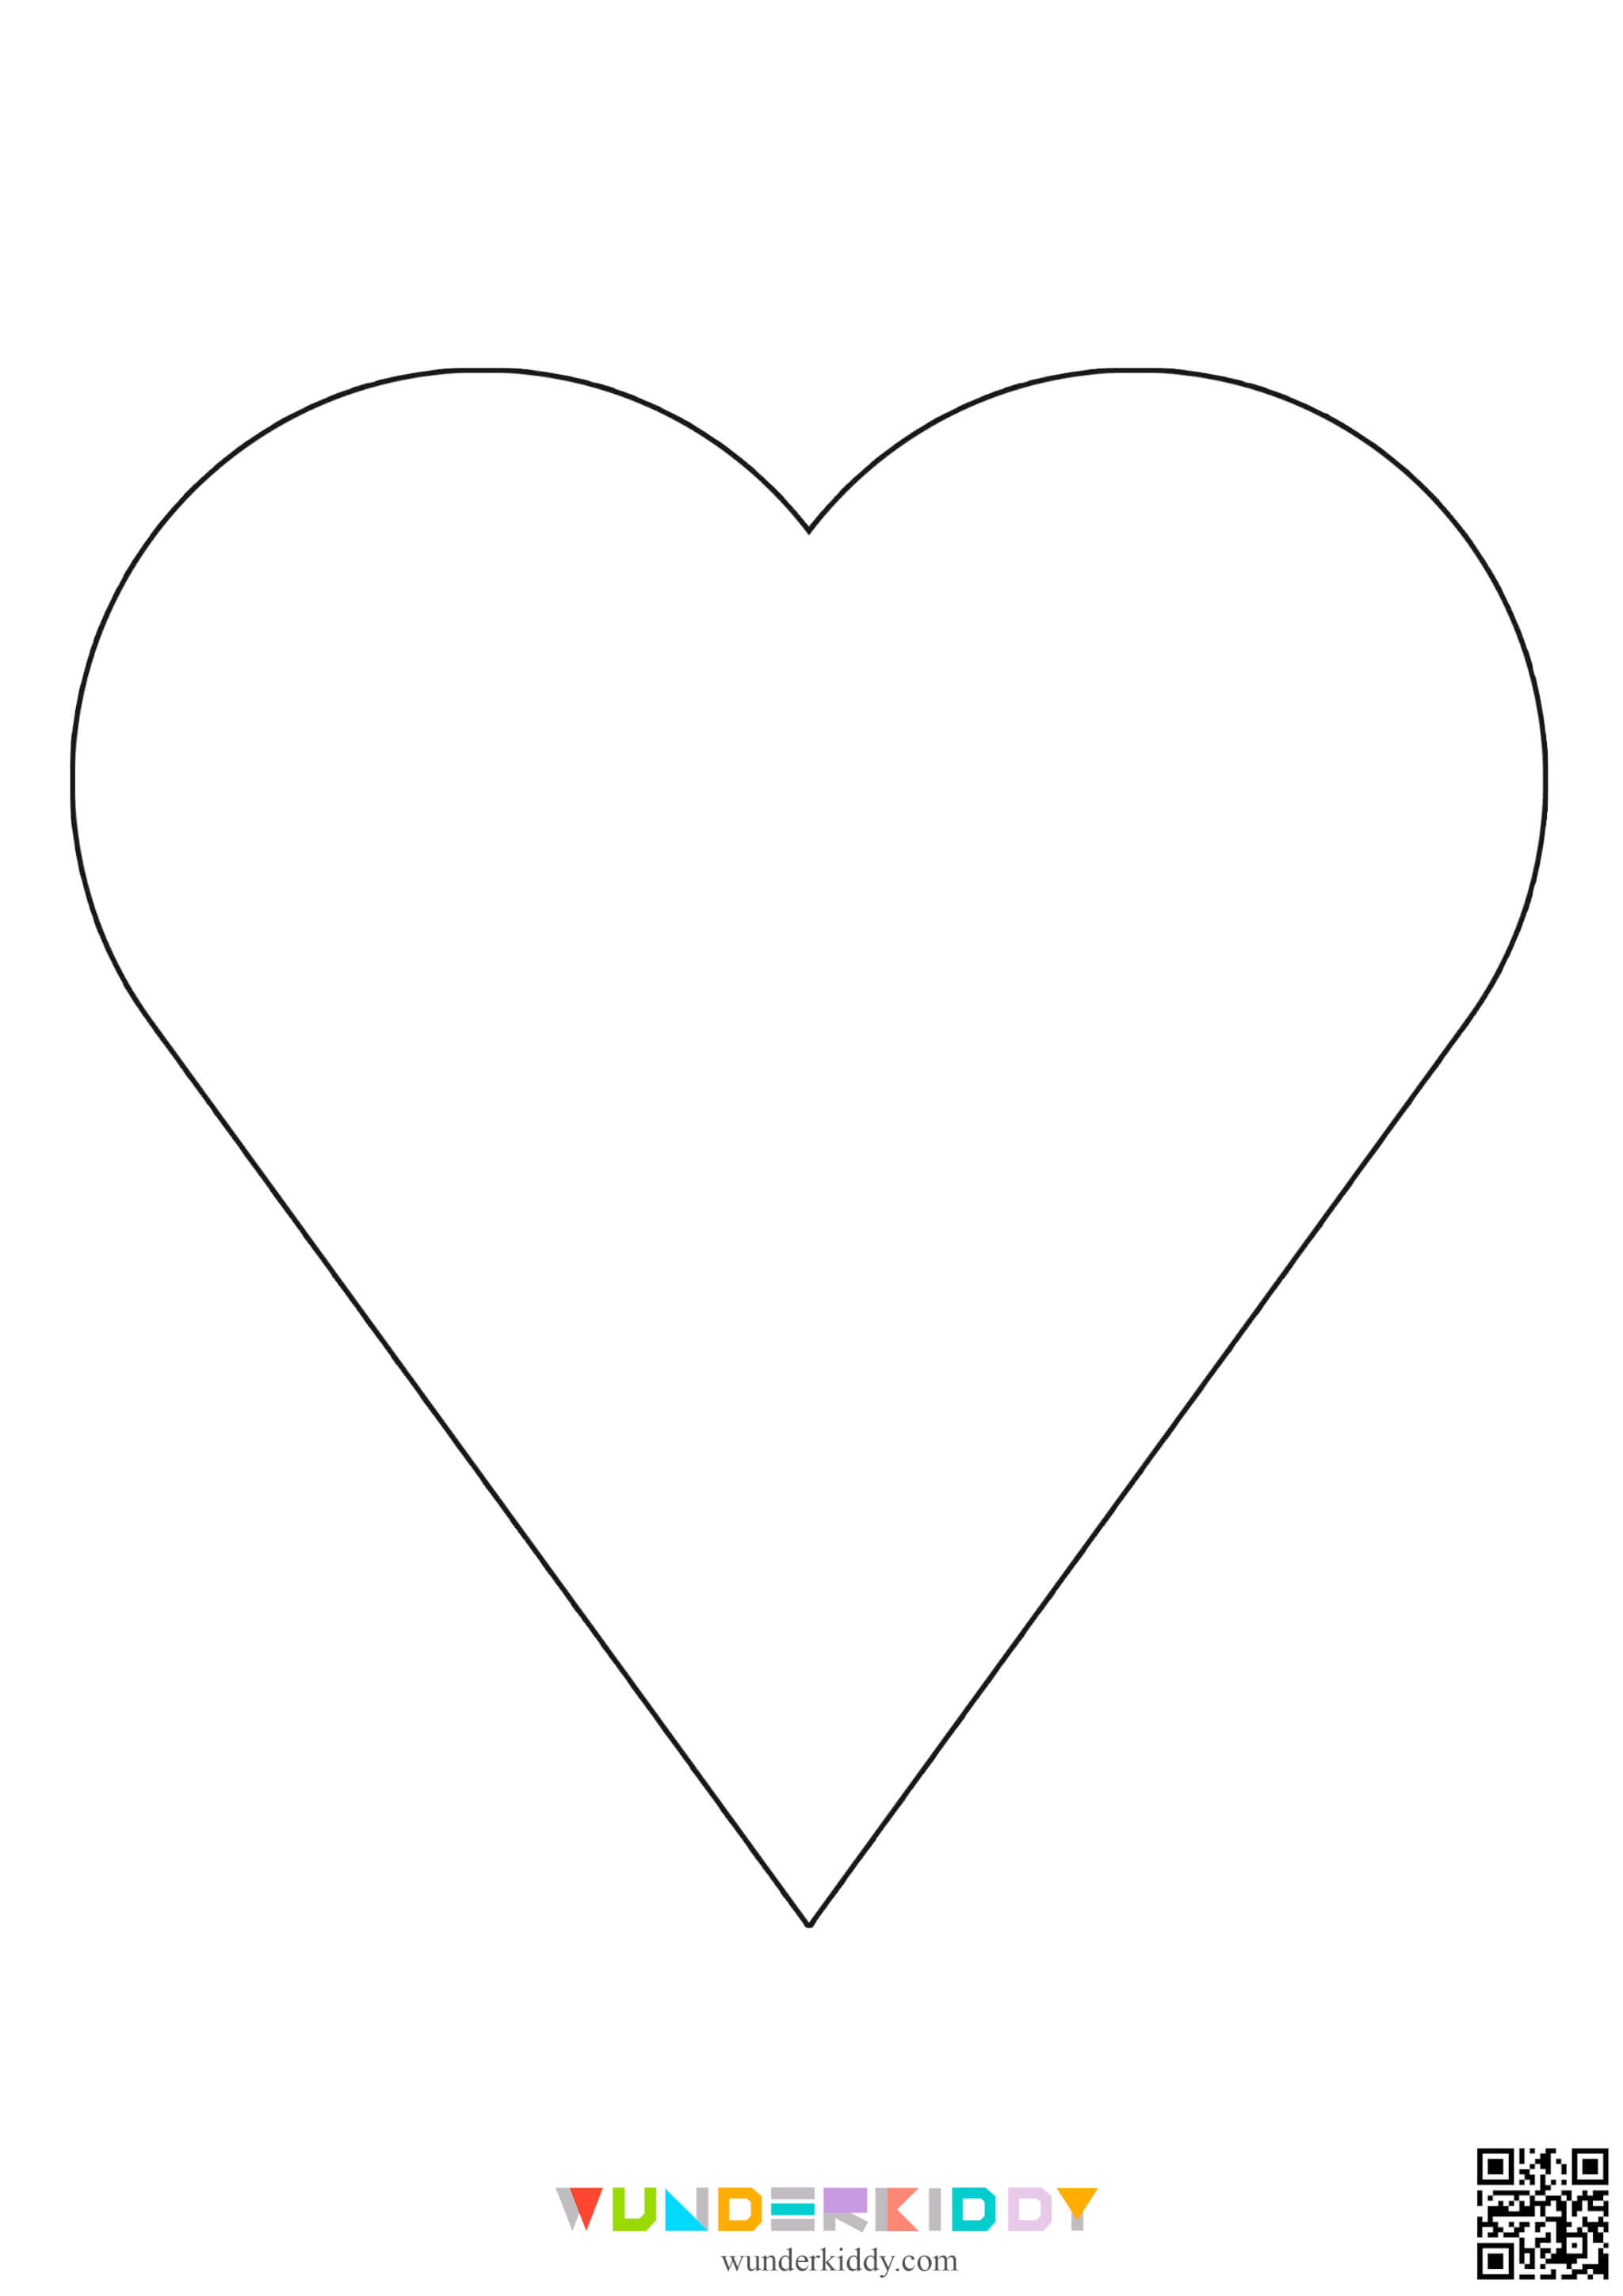 Heart Template Printable - Image 5